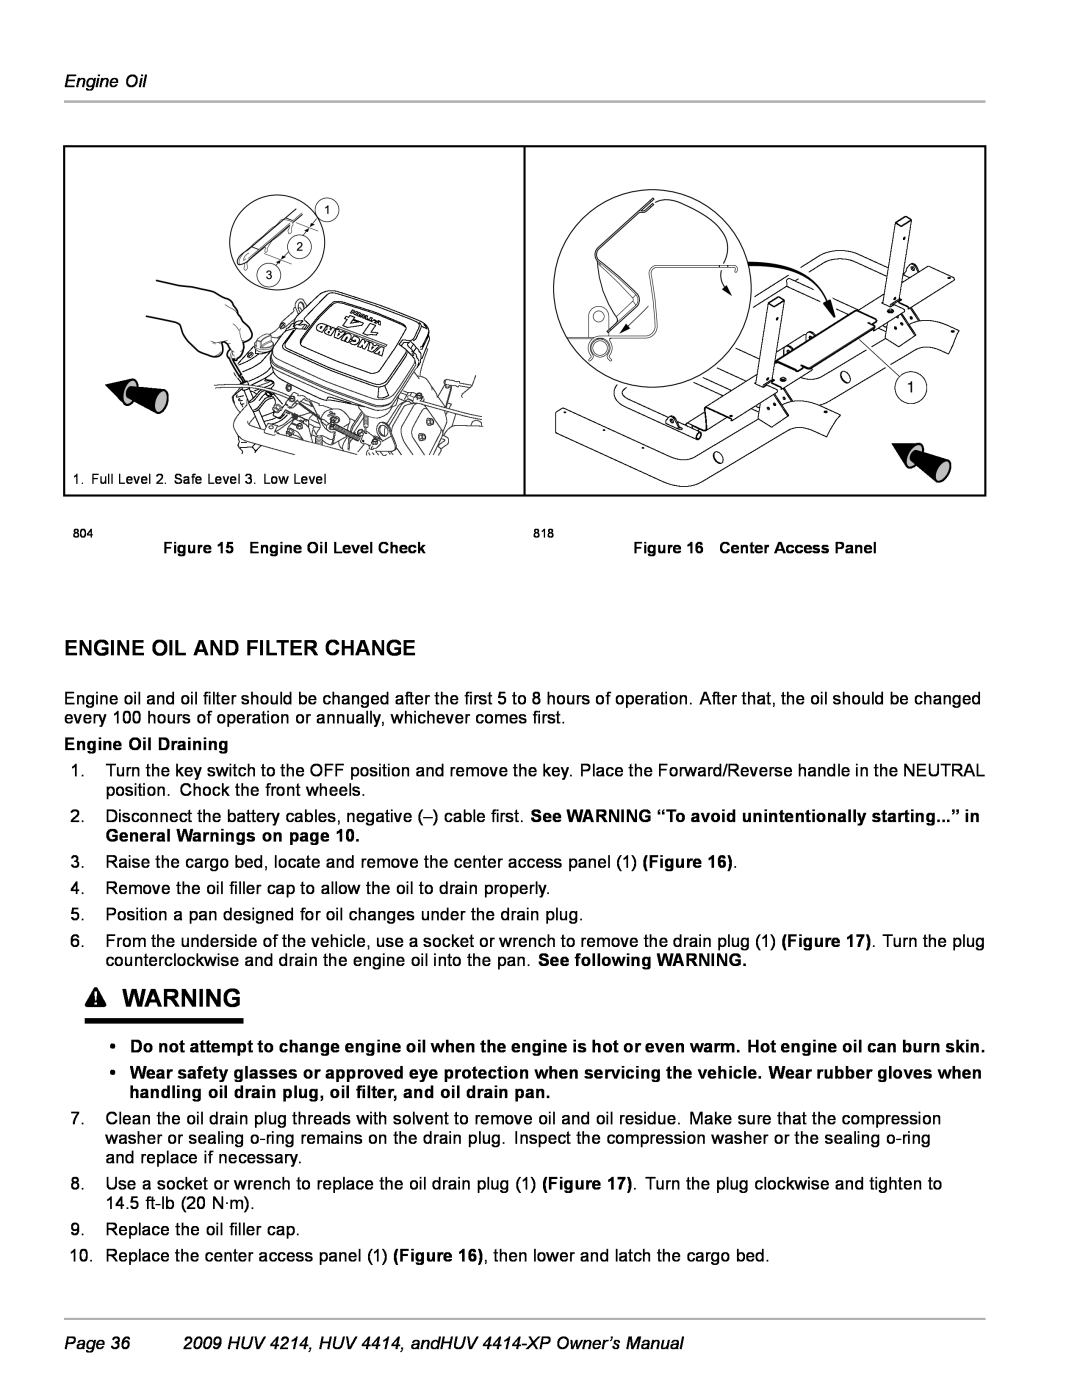 Husqvarna owner manual Engine Oil And Filter Change, Page 36 2009 HUV 4214, HUV 4414, andHUV 4414-XP Owner’s Manual 